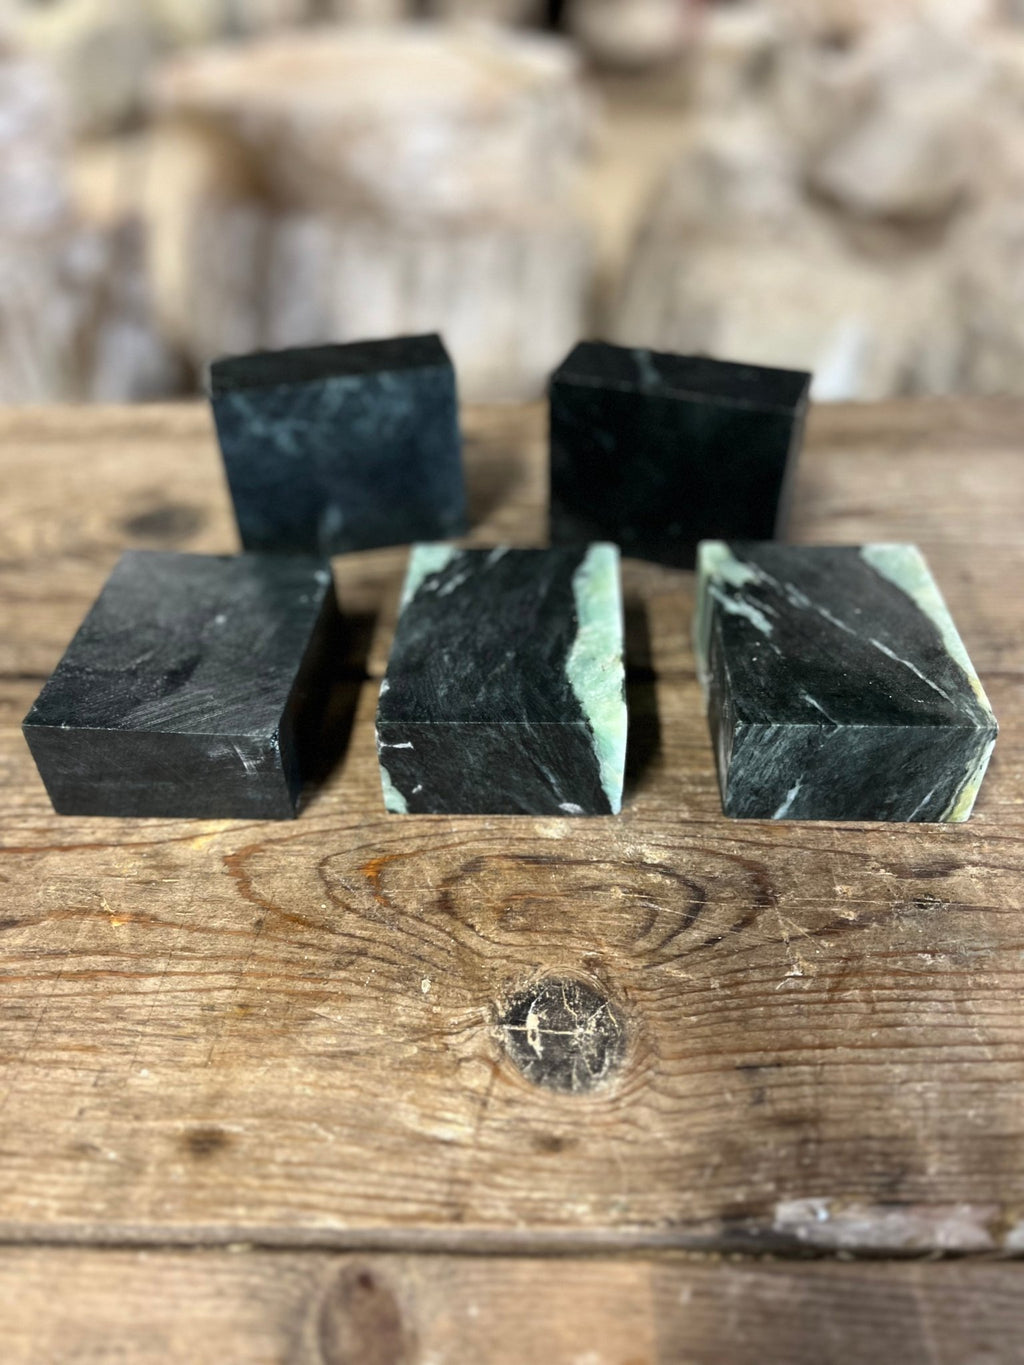 4lb Indian Green Soapstone Block 4.5x3x3 – Gian Carlo Artistic Stone